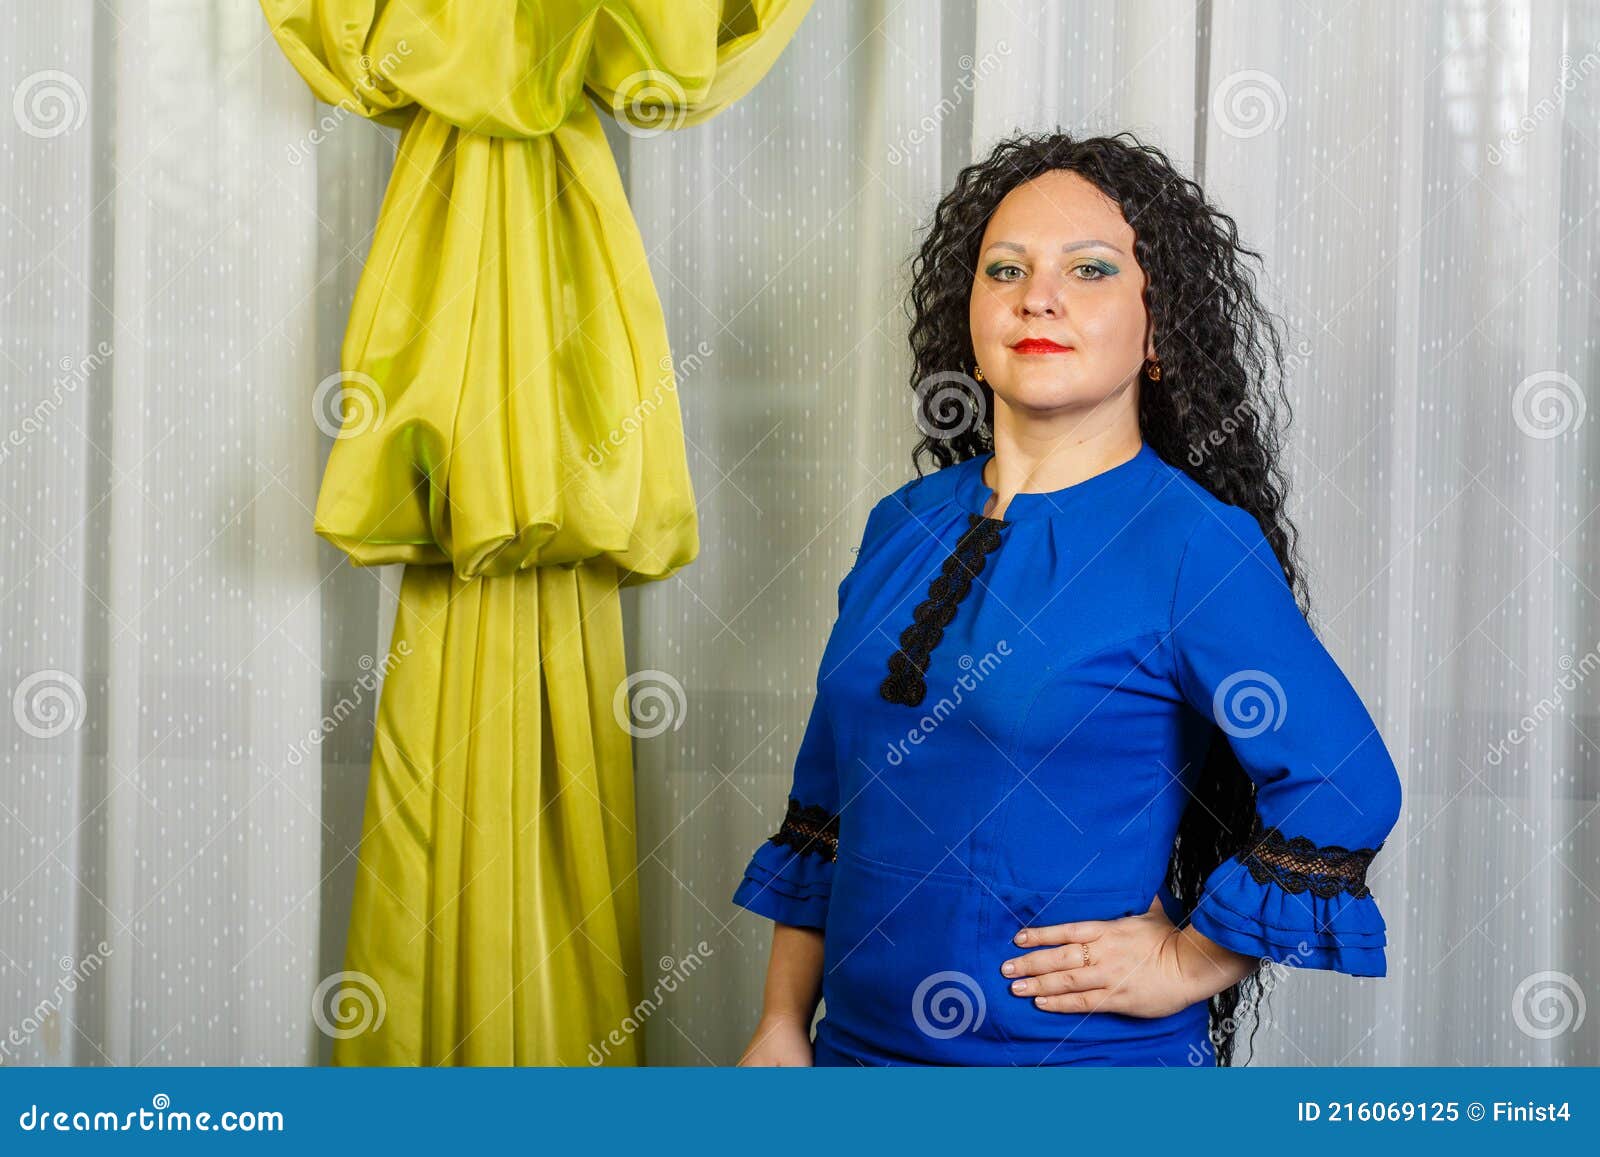 Curly Brunette Woman In Blue Dress Posing Stock Image Image Of Desk Billboard 216069125